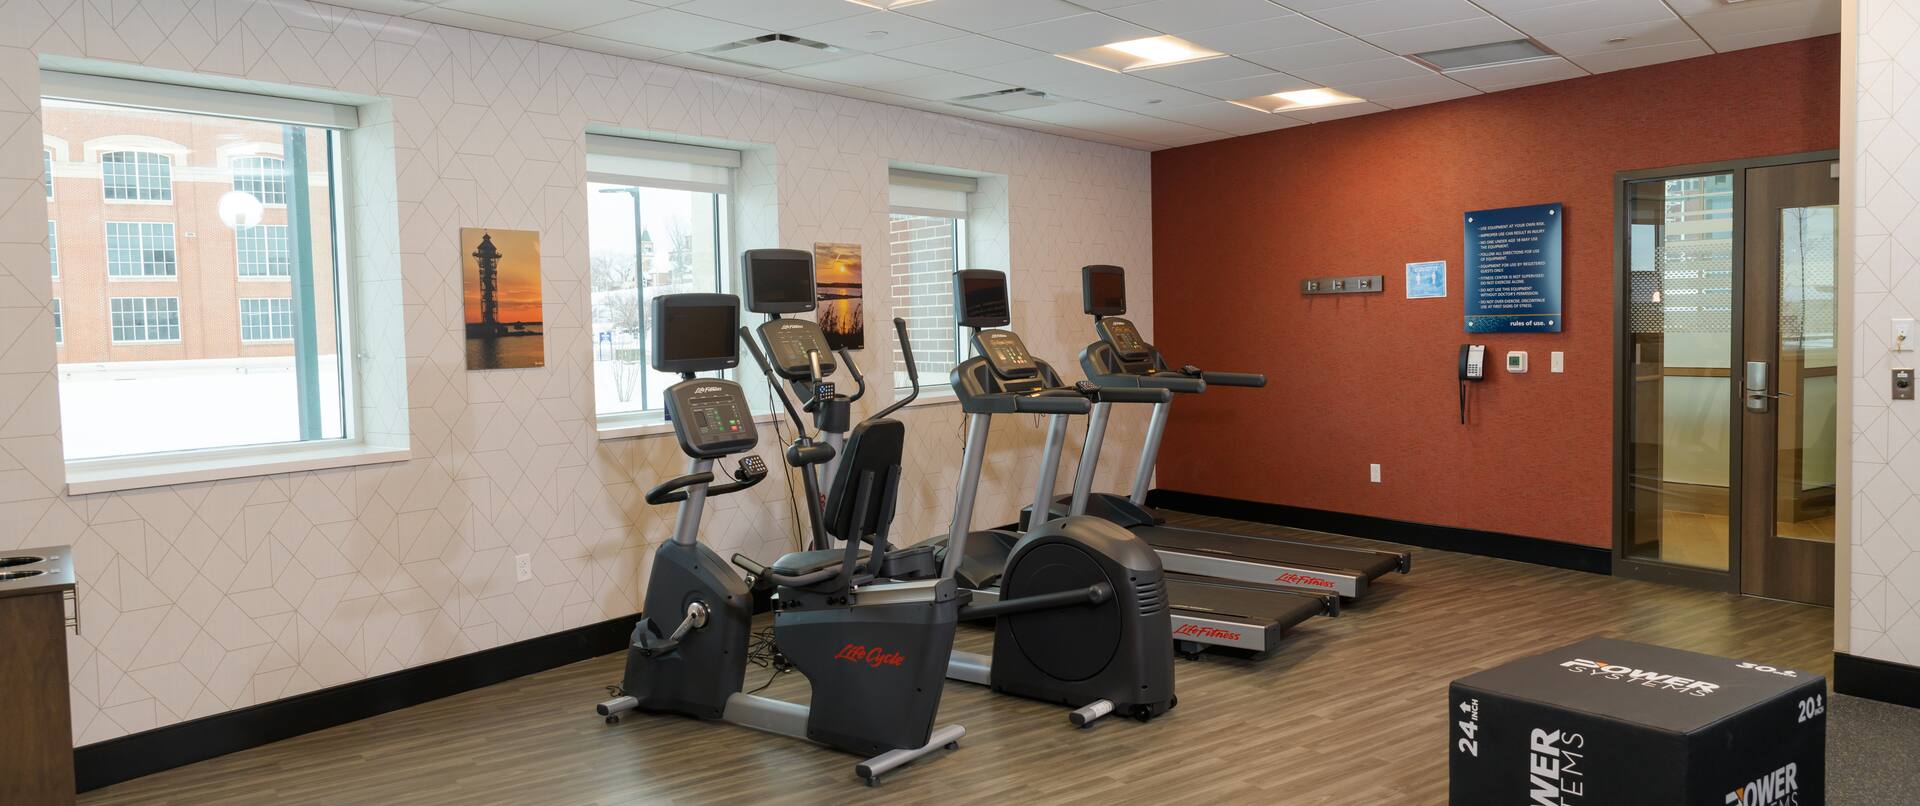 Fitness Center View of Treadmills